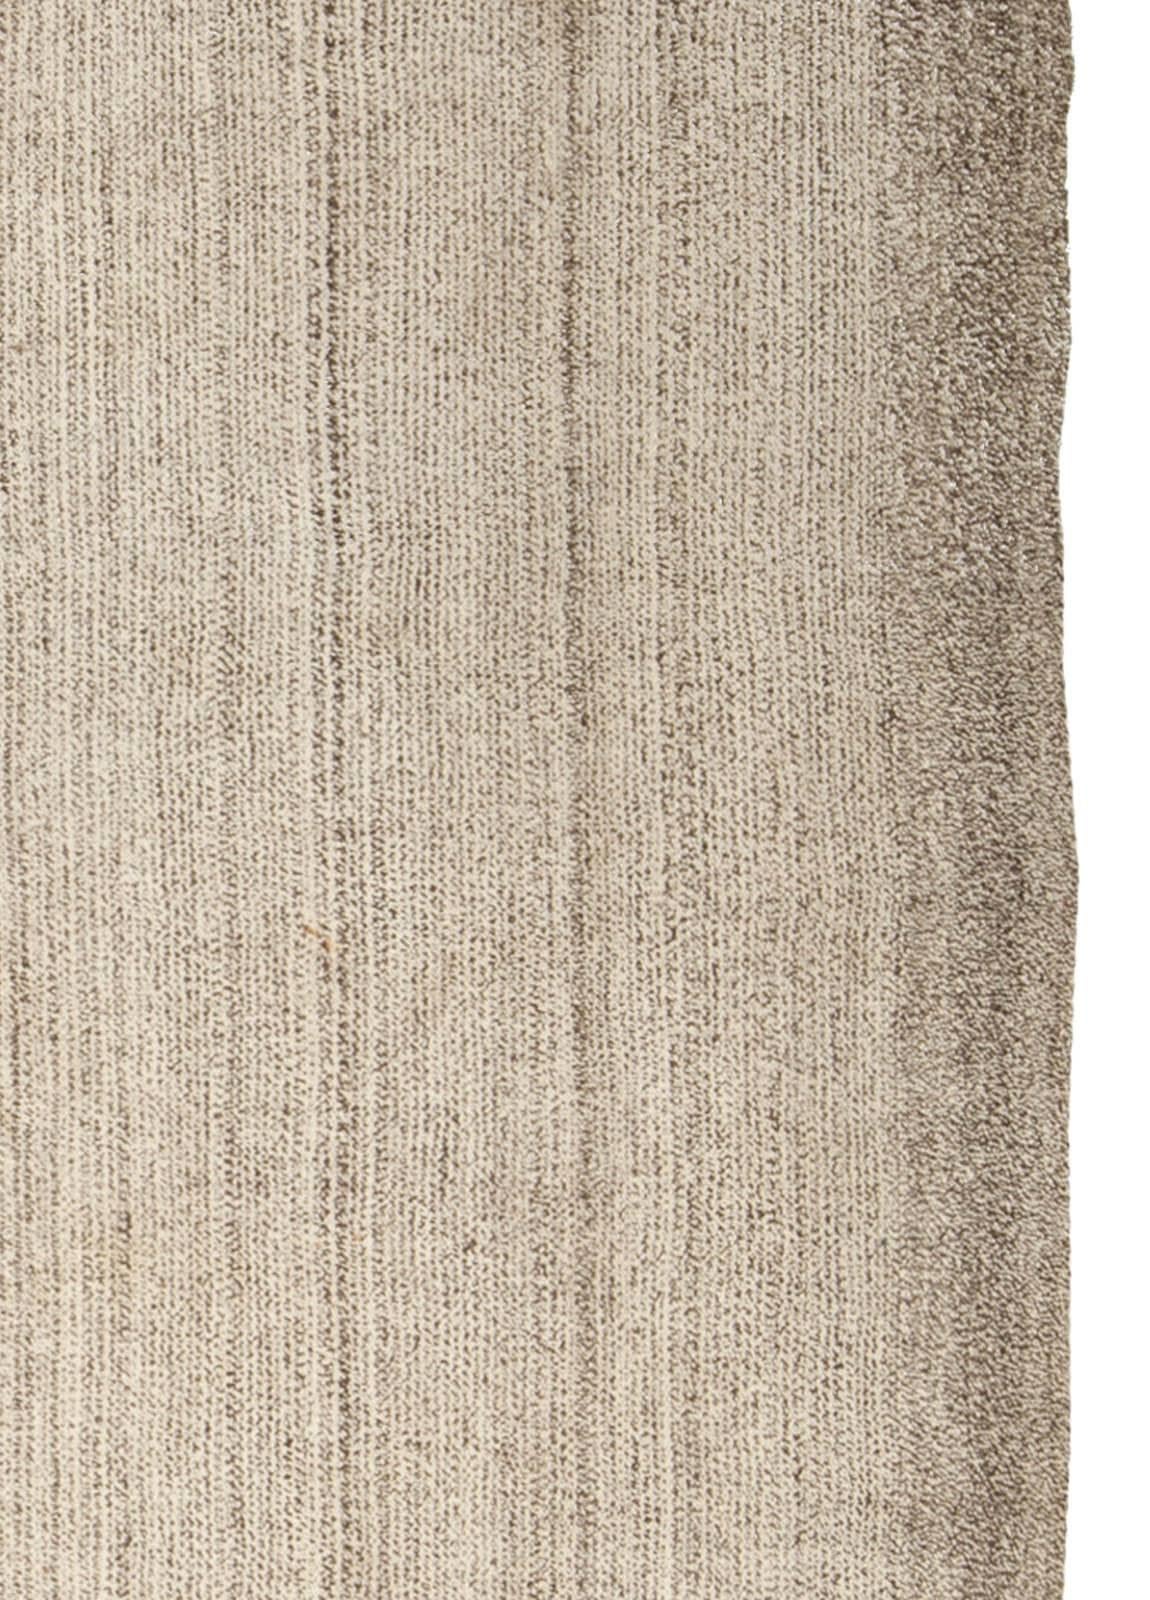 Contemporary Beige and Brown Persian Kilim Wool Rug by Doris Leslie Blau For Sale 2